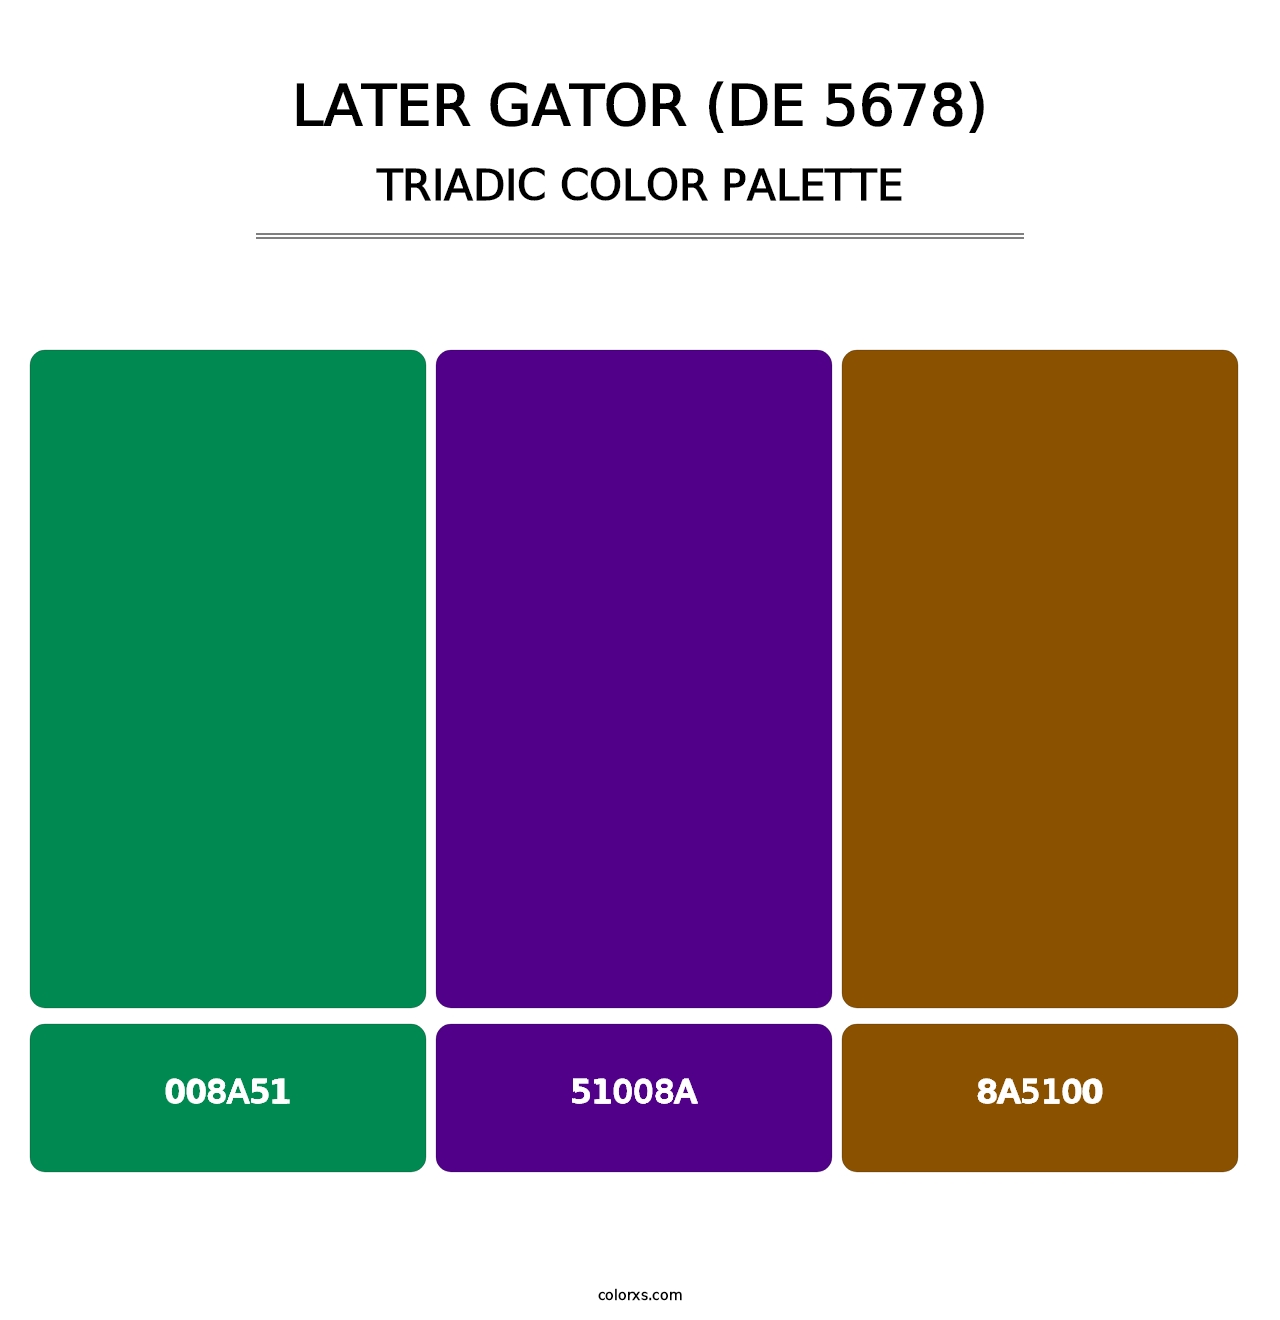 Later Gator (DE 5678) - Triadic Color Palette